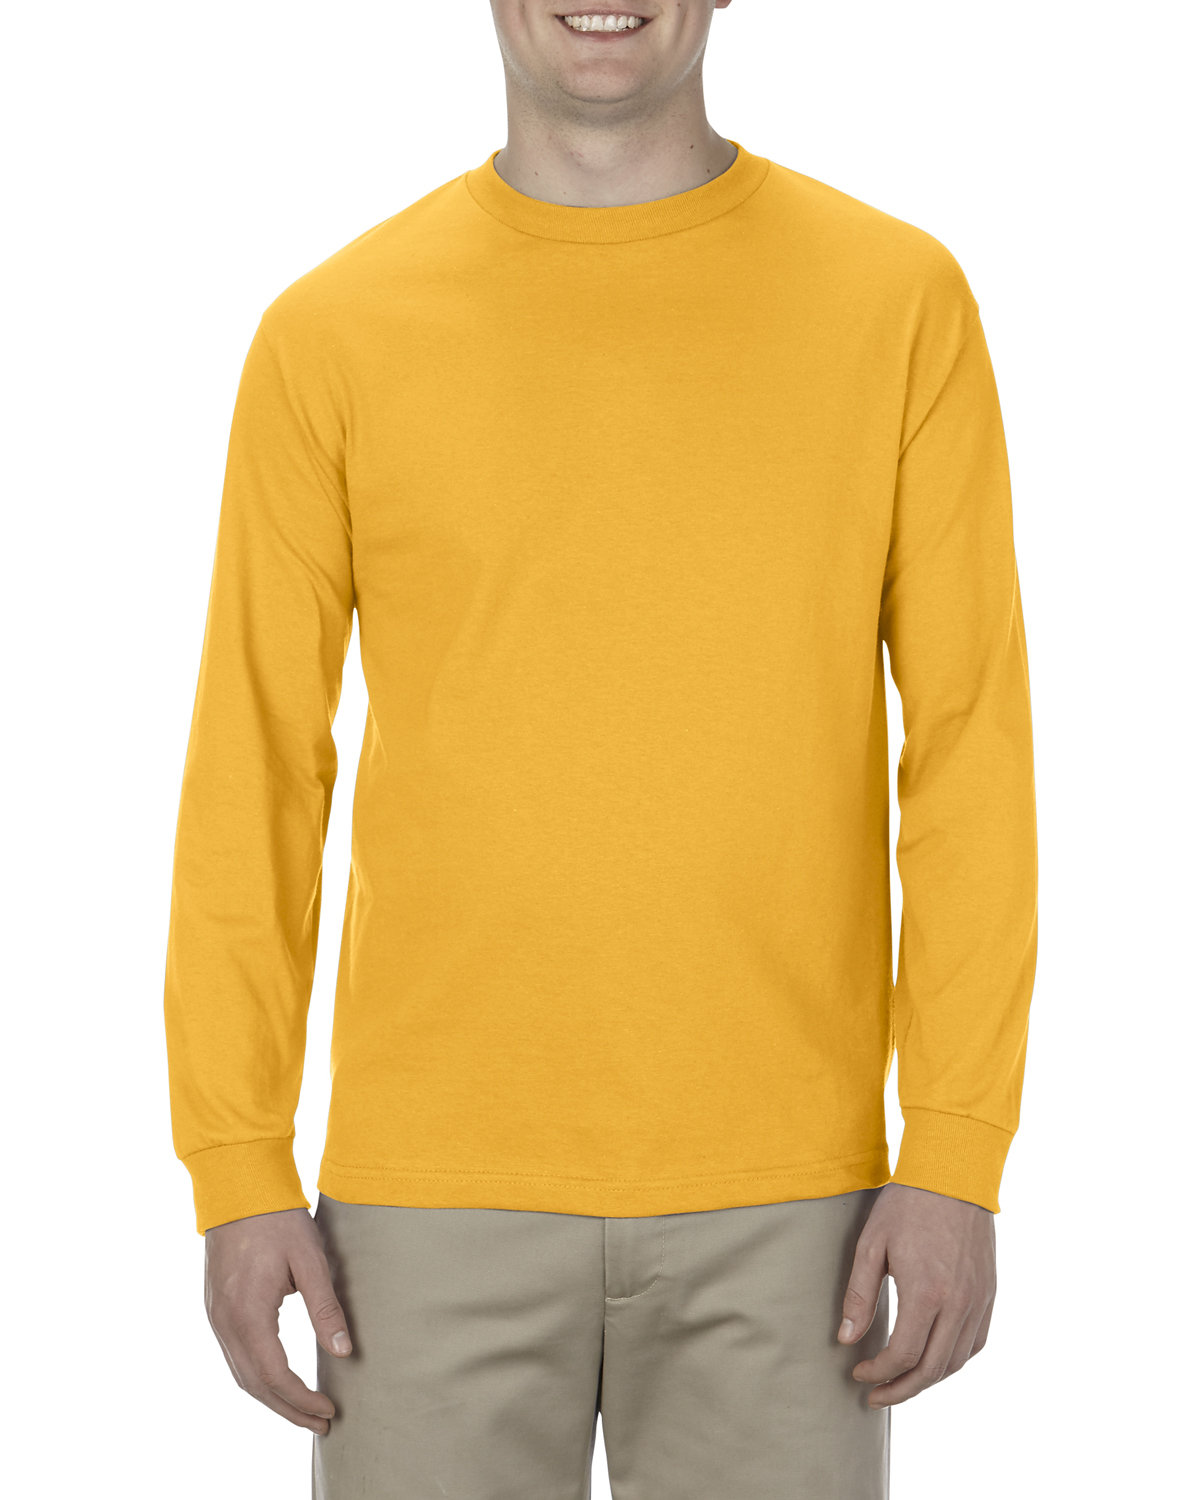 American Apparel Adult 6.0 oz., 100% Cotton Long-Sleeve T-Shirt GOLD 